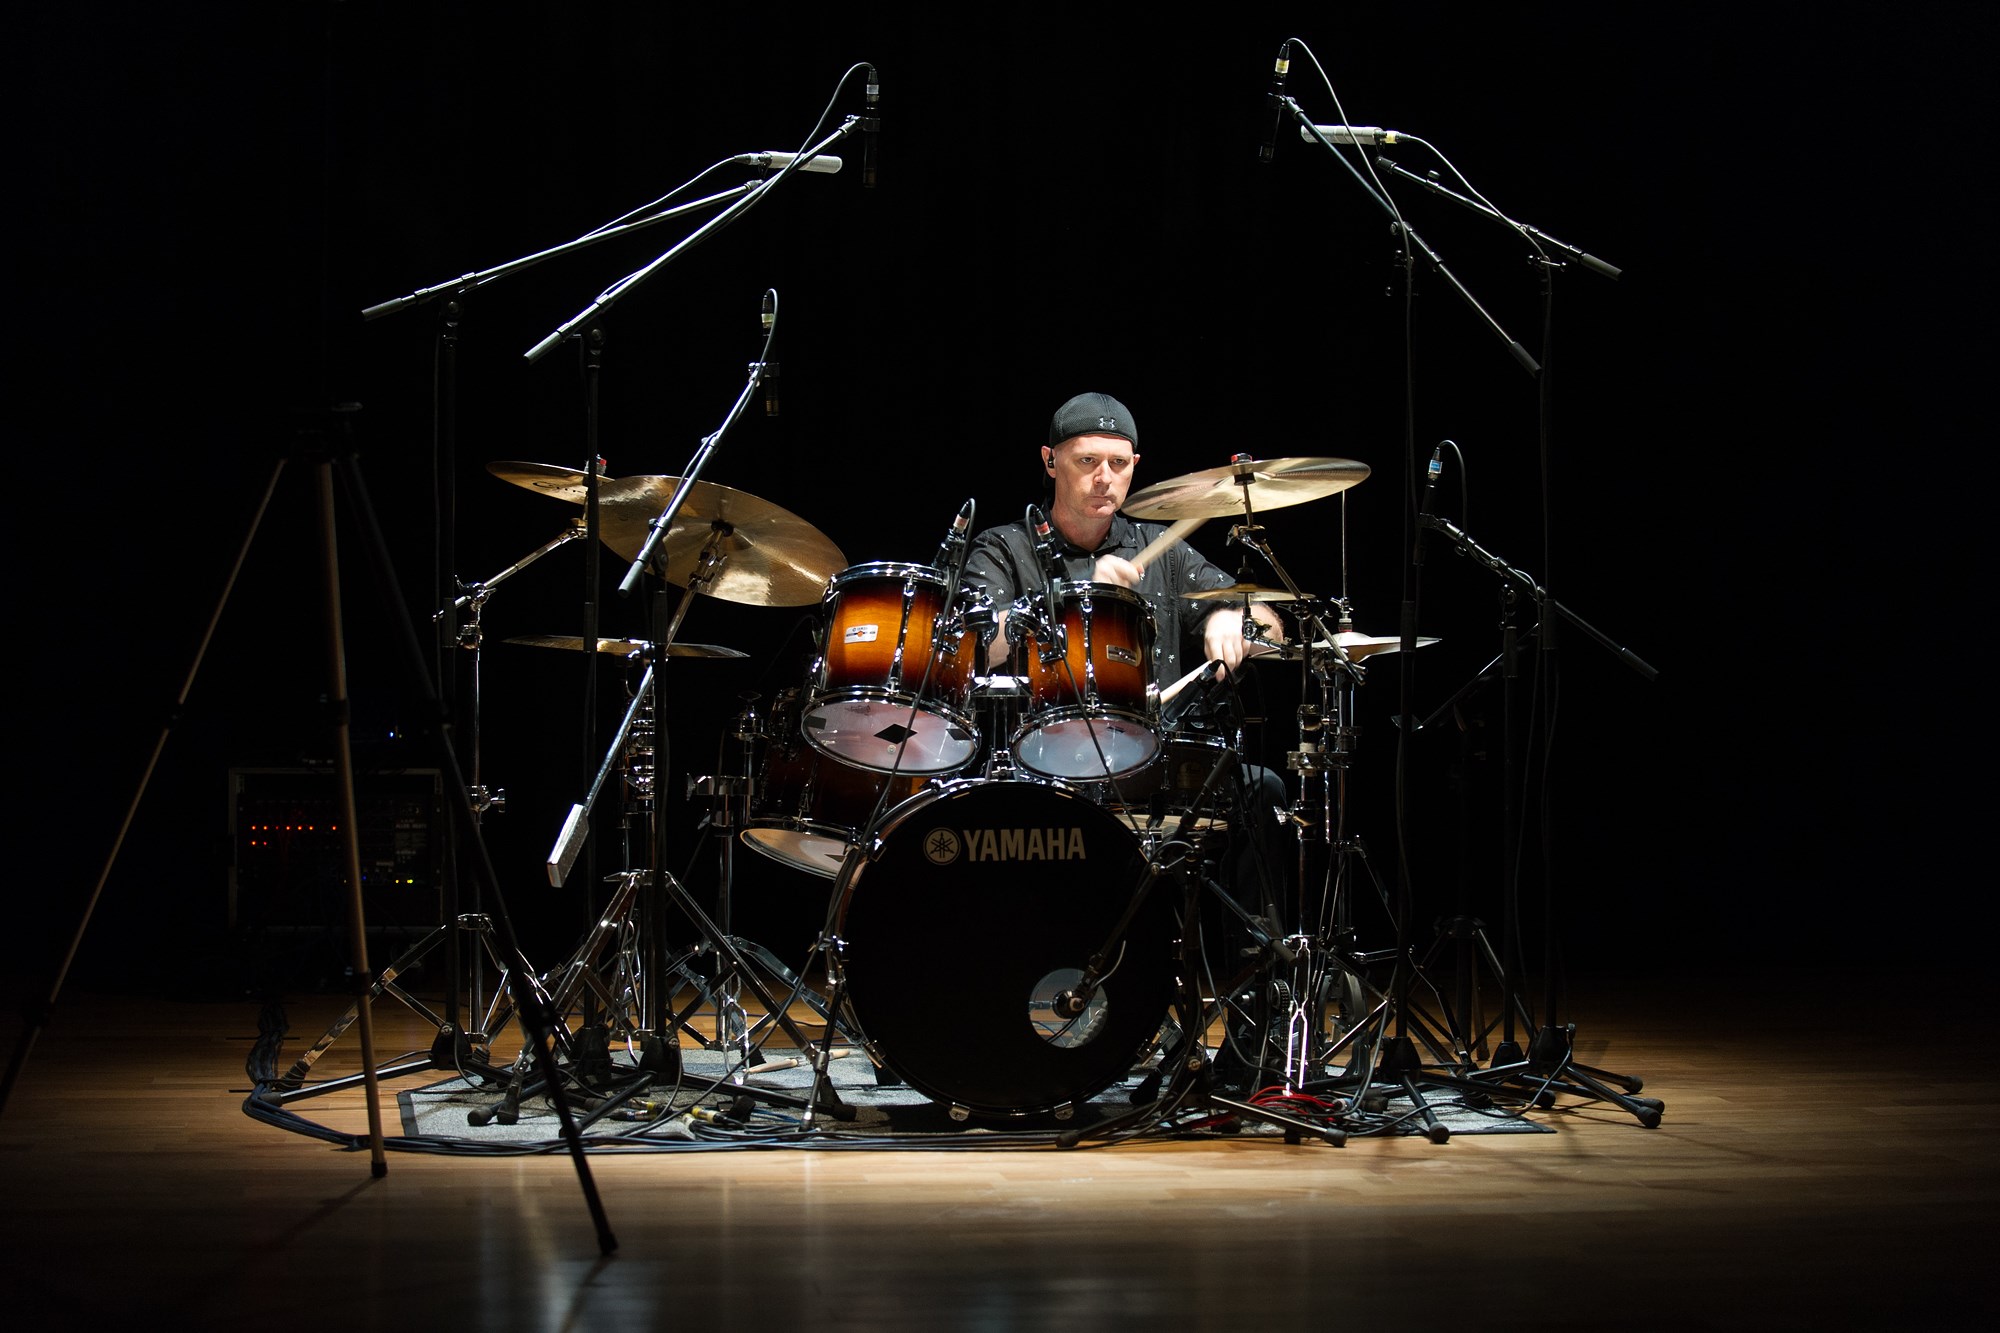 Zsolt Szentmartoni playing a gorgeous Yamaha kit on stage